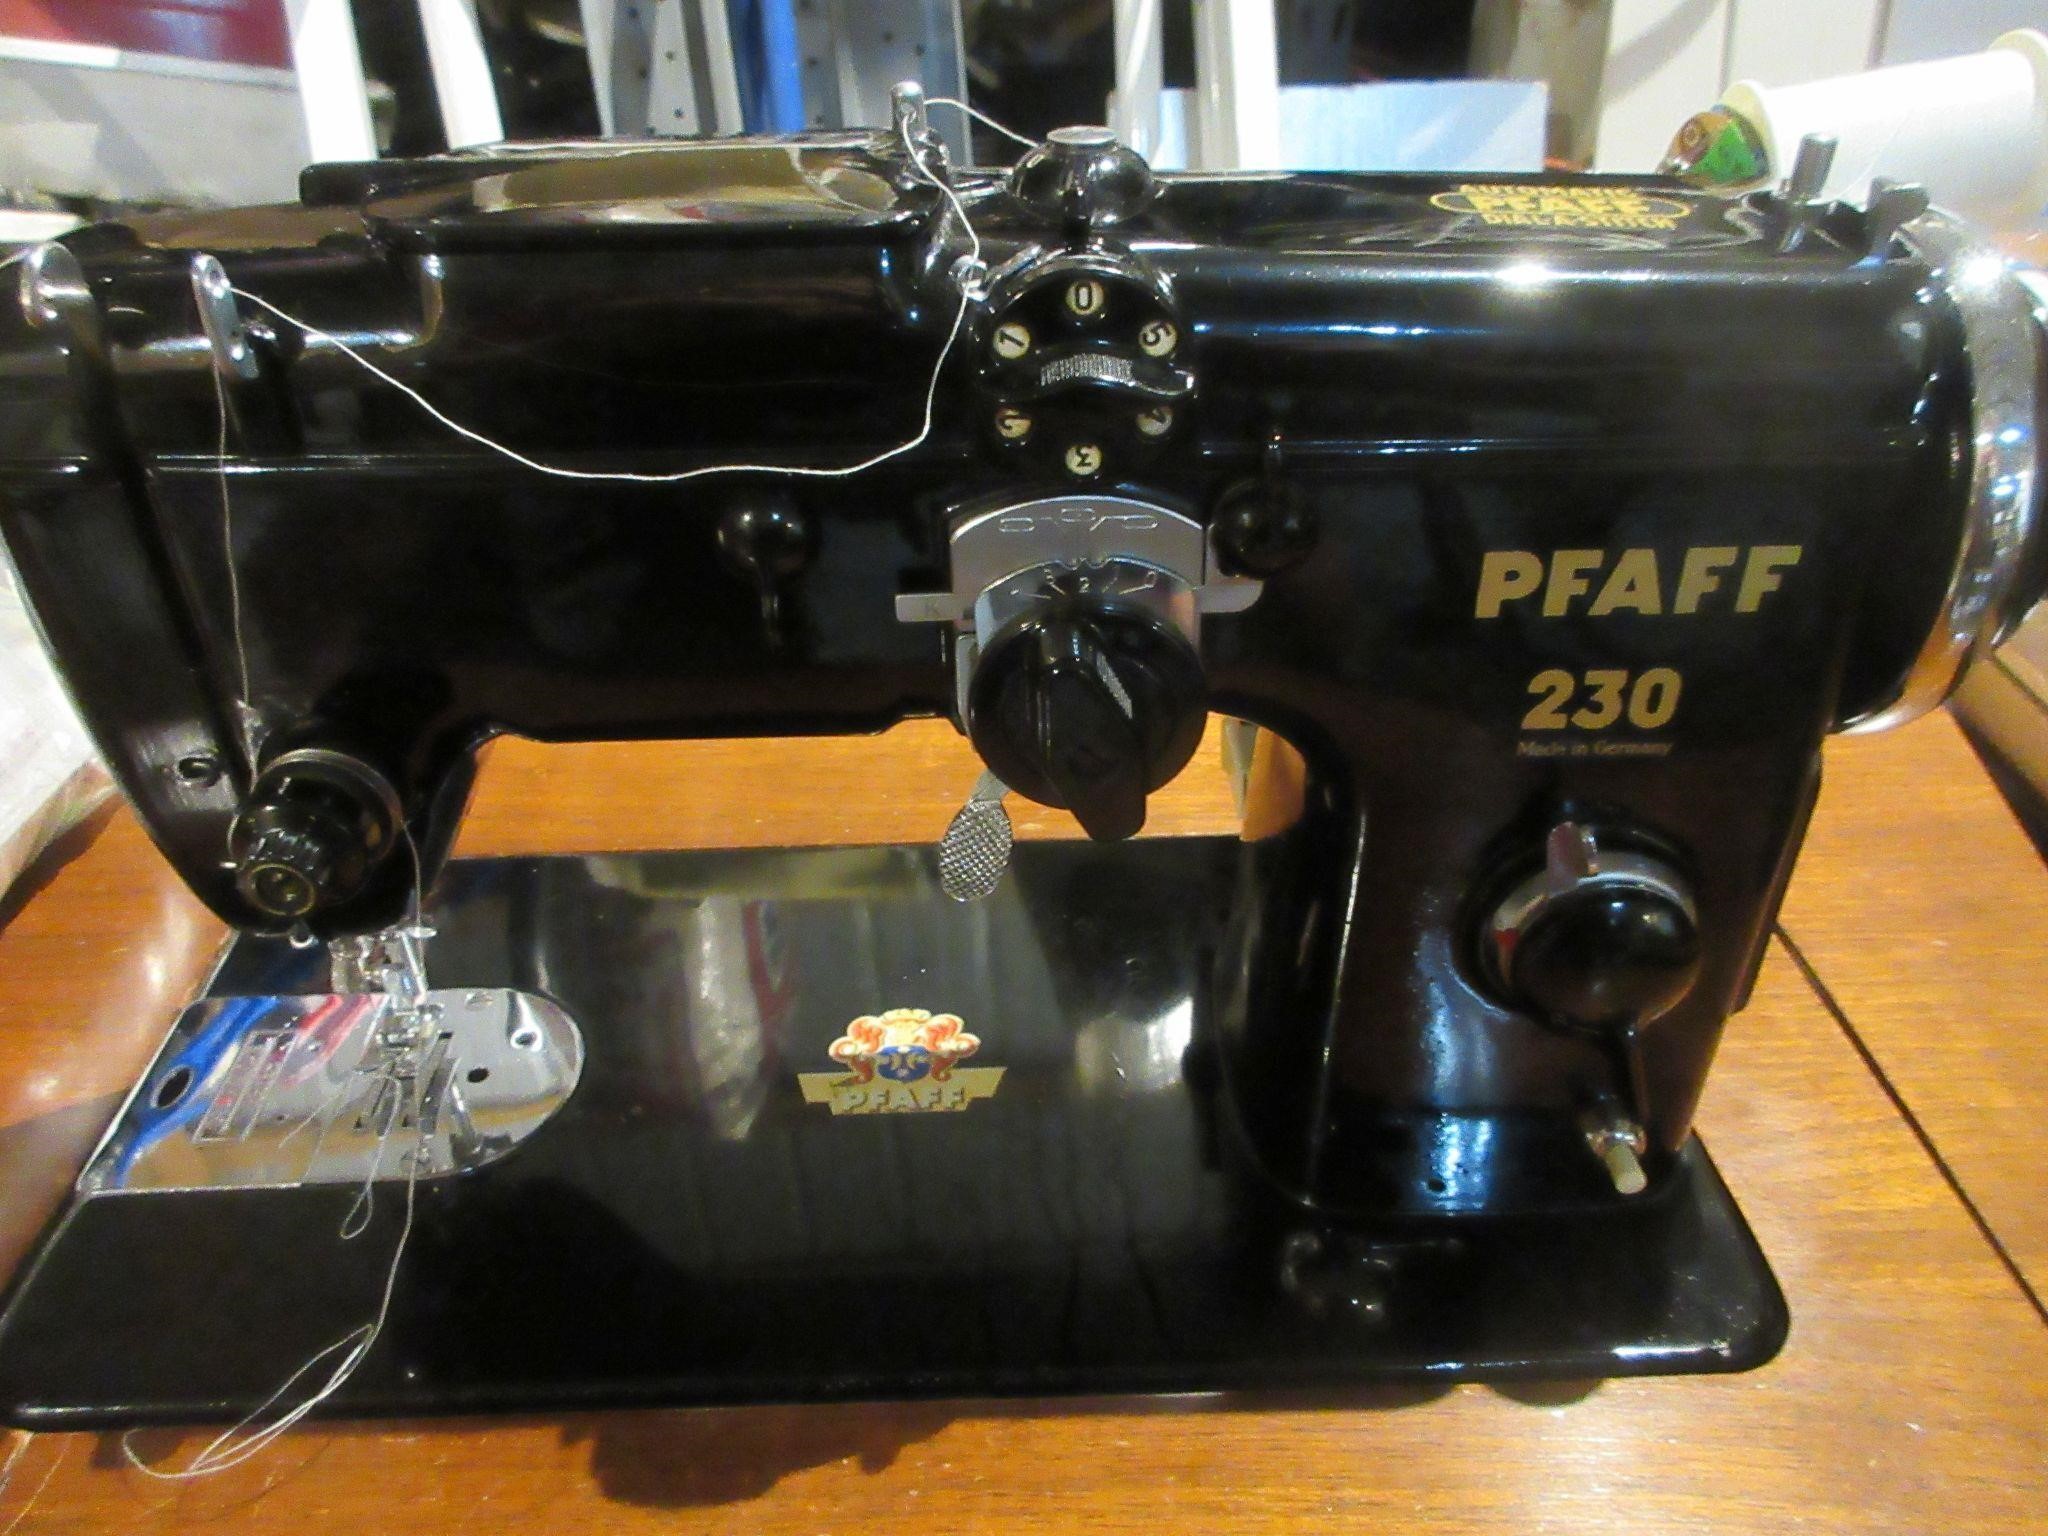 PFAFF Sewing Machine in Cabinet - See Details